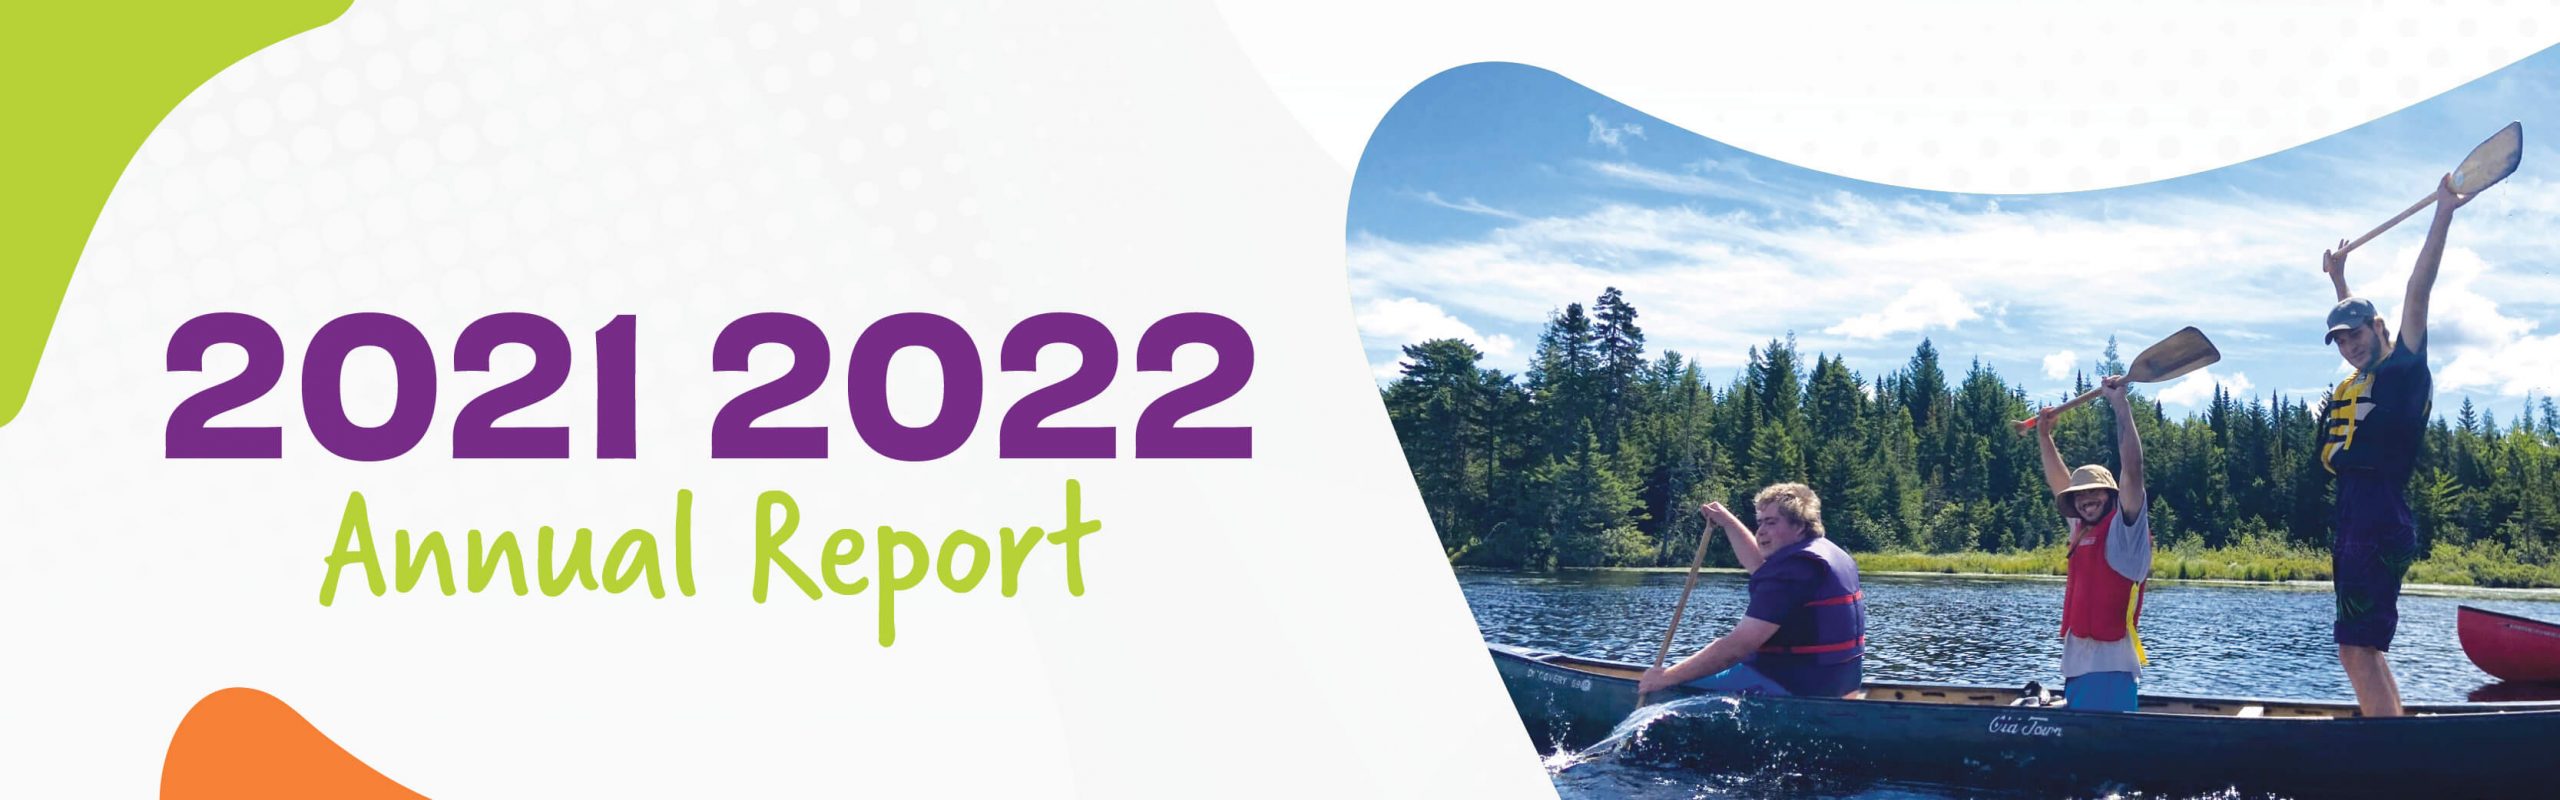 2021-2022 ANNUAL REPORT